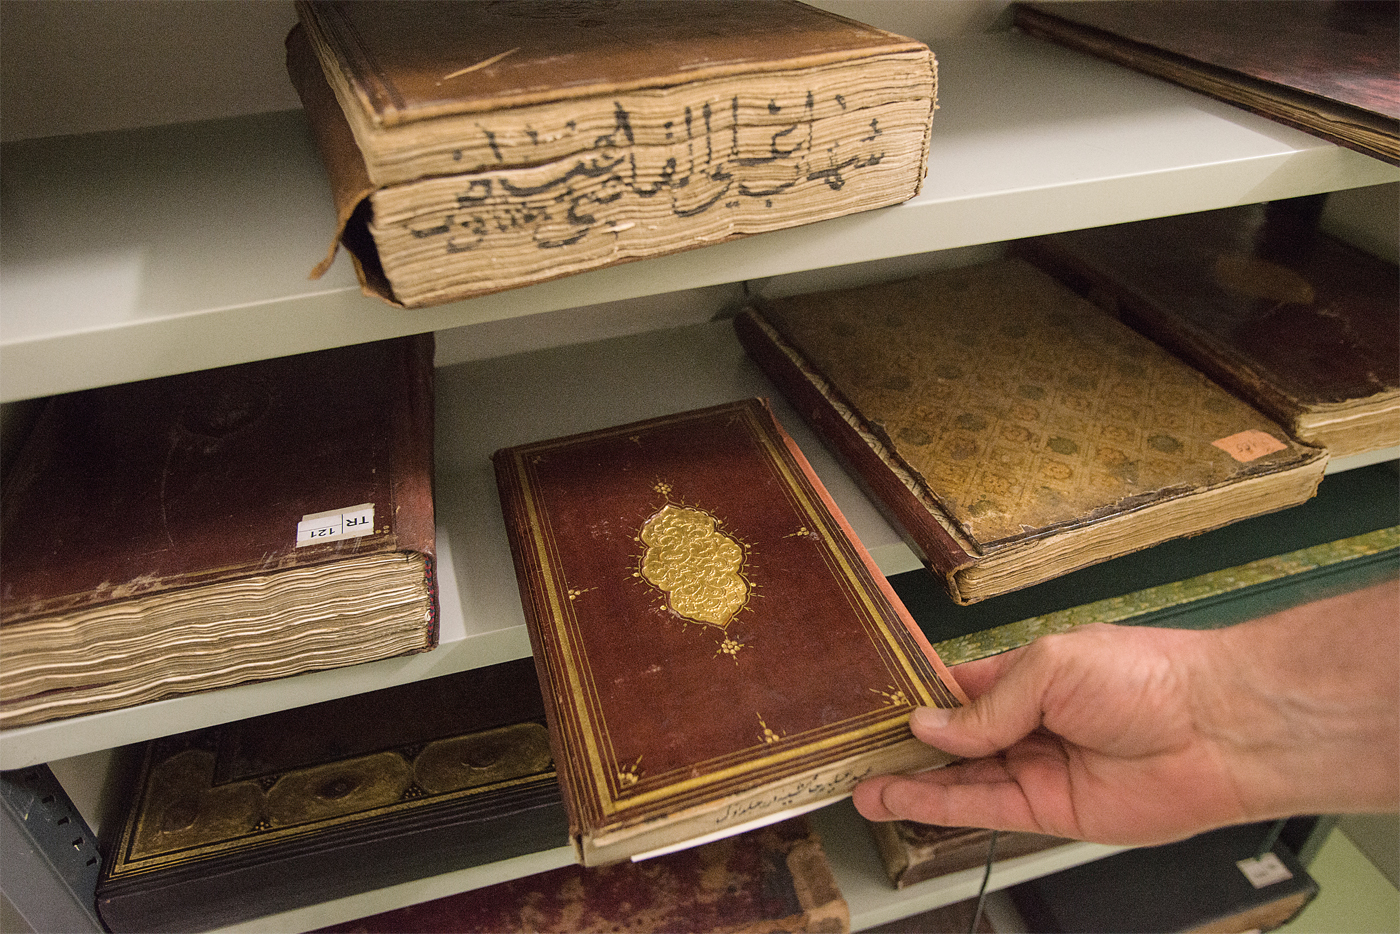 <p><em>위:</em> 몇 세기 전으로 거슬러 올라가 만들어진 수많은 양각 무늬가 있는 가죽 커버로 아름답게 덮인 서적들이 Gazi Husrev-beg 도서관의 25,000권의 컬렉션 중에 있다. Gazi Husrev-beg가 보스니아(오늘날 보스니아와 헤르체고비나) 총독으로서 사라예보에 도착한 1521년에 가져온 책들이 그 중심에 있었다. <em>아래, 오른쪽:</em> 사라예보 동방연구소의 전 소장인 Lejla Gazič은 1992년 5월 16일 밤 세르비아 국가주의자들이 연구소를 폭발시킨 후 책들이 불타는 것을 무력하게 지켜보았다. 그녀는 아직도 도서관을 공격한 이유에 대해 이해하려고 애쓴다.</p>
